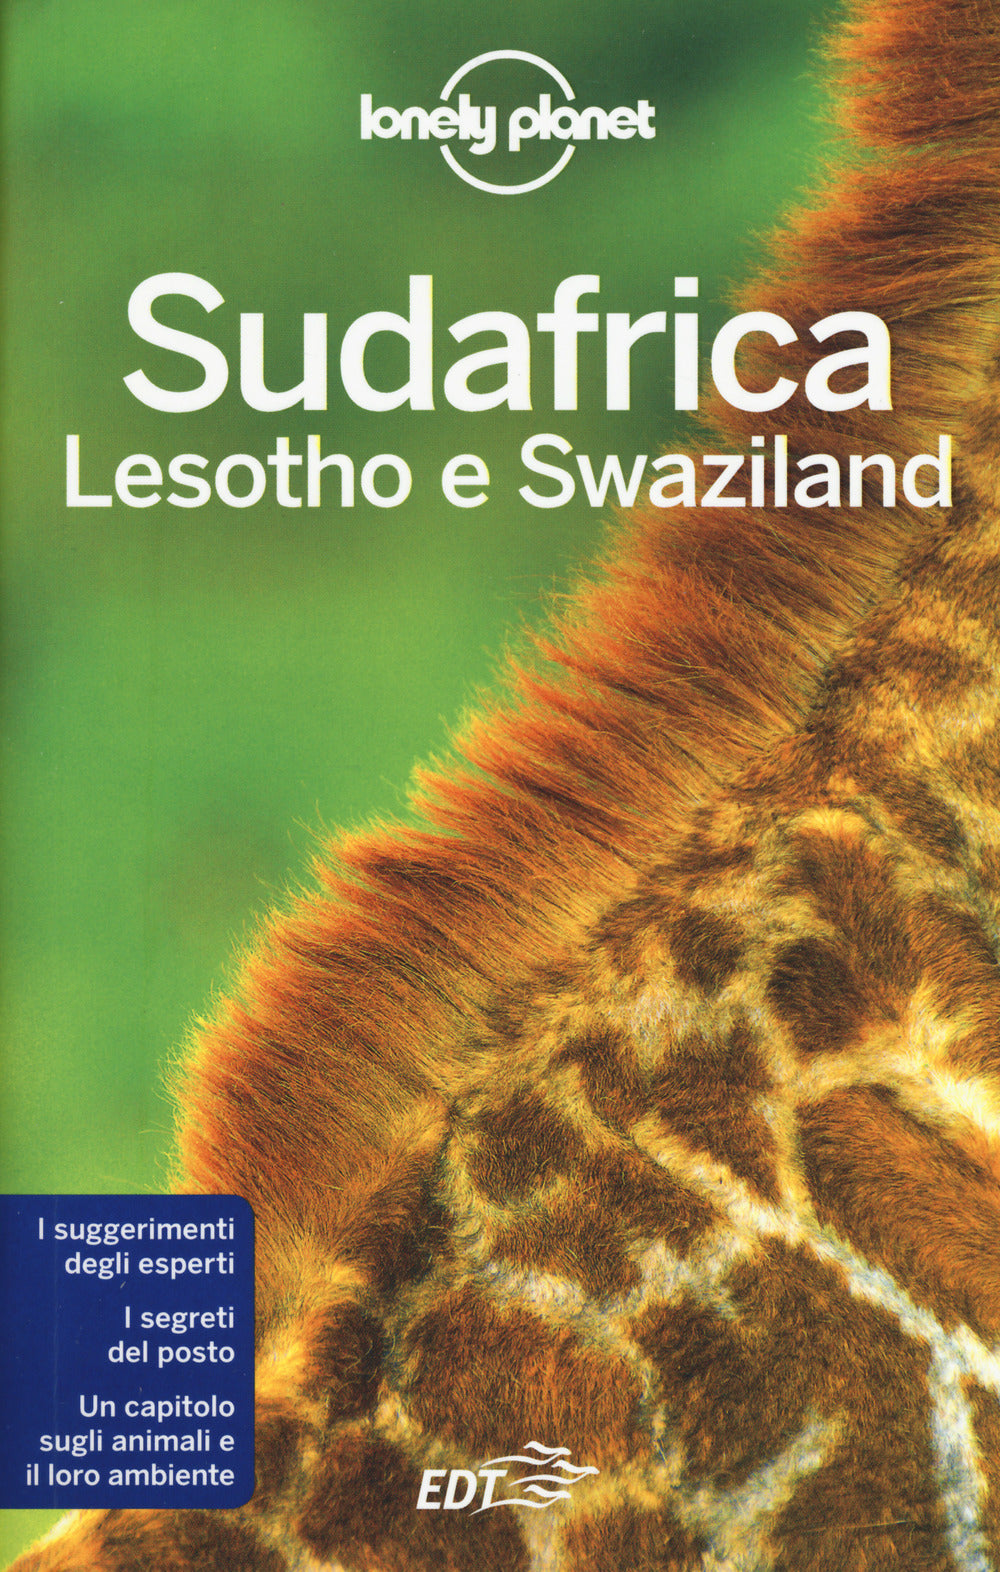 Sudafrica, Lesotho e Swaziland.